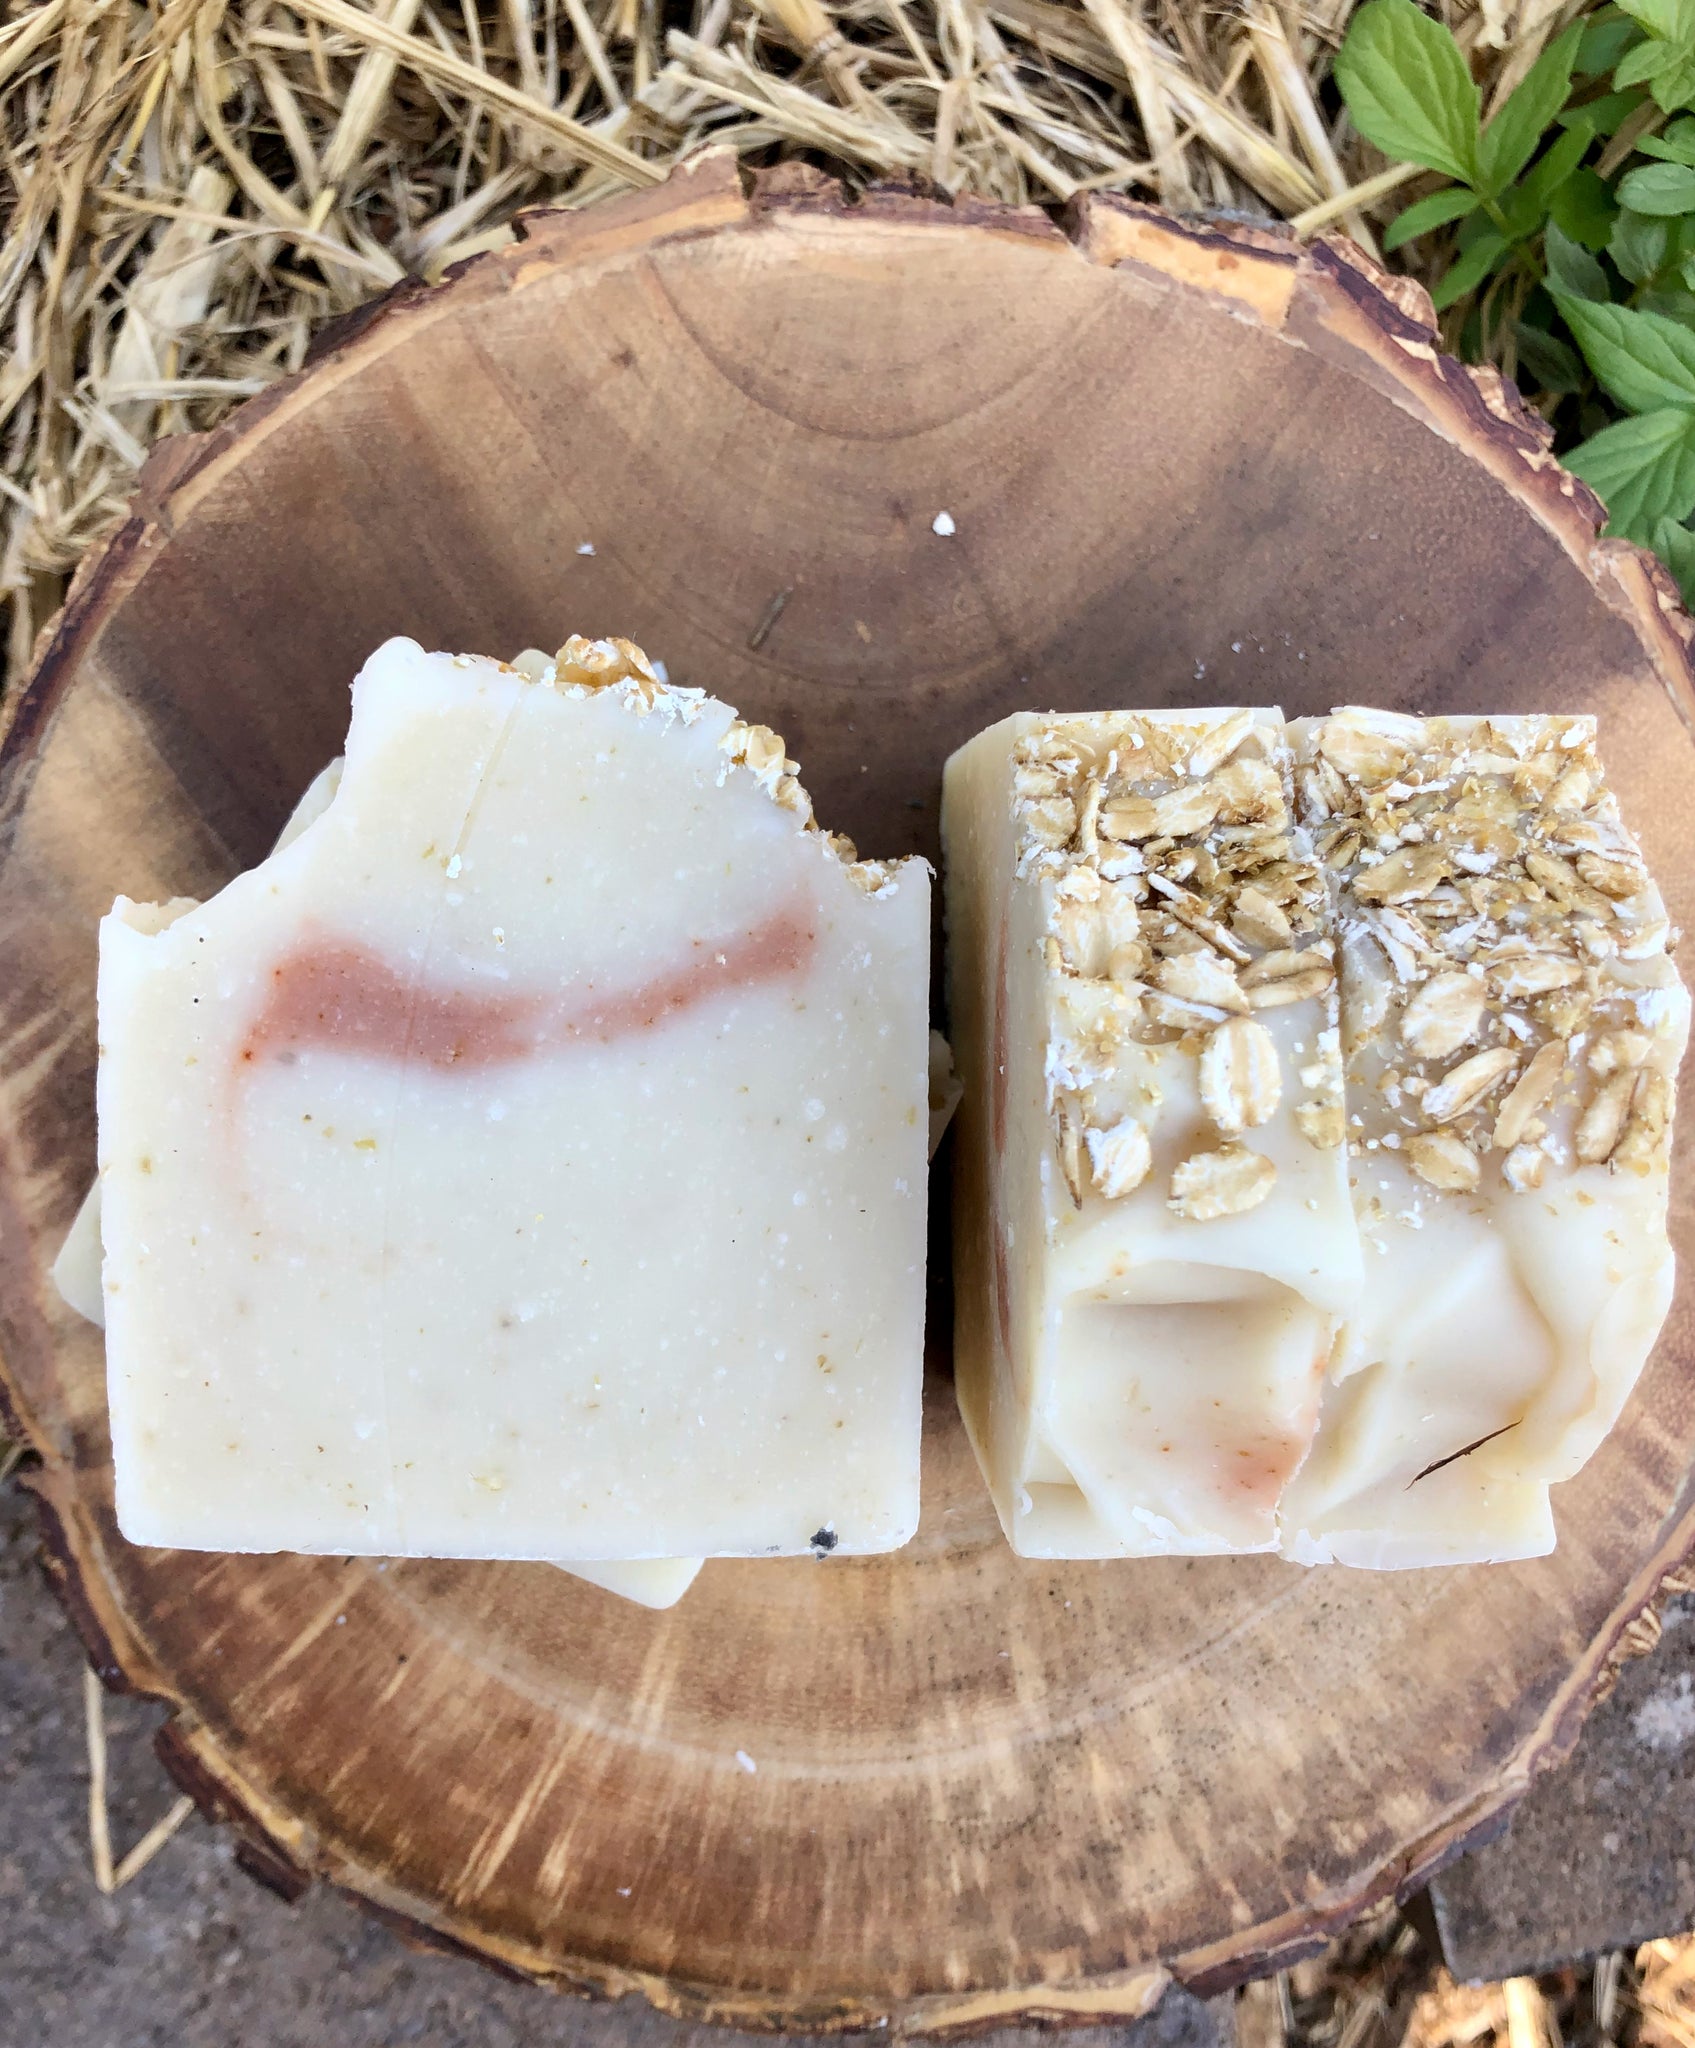 Cedarwood Oatmeal soap bar– Cedarwood Soap